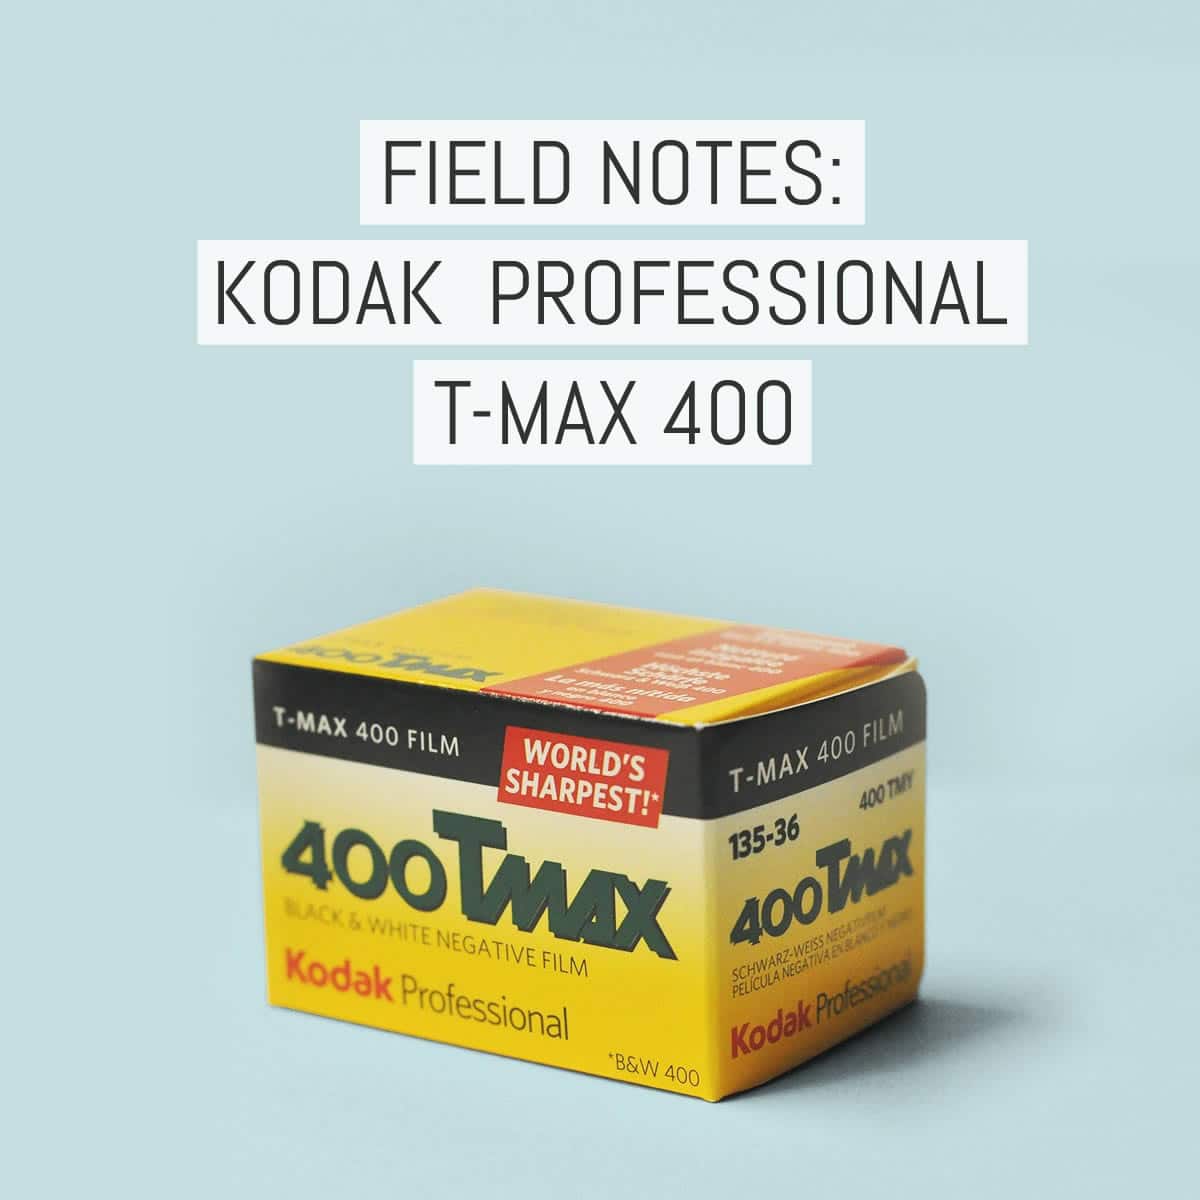 Cover - Field Notes - Kodak Professional T-MAX 400